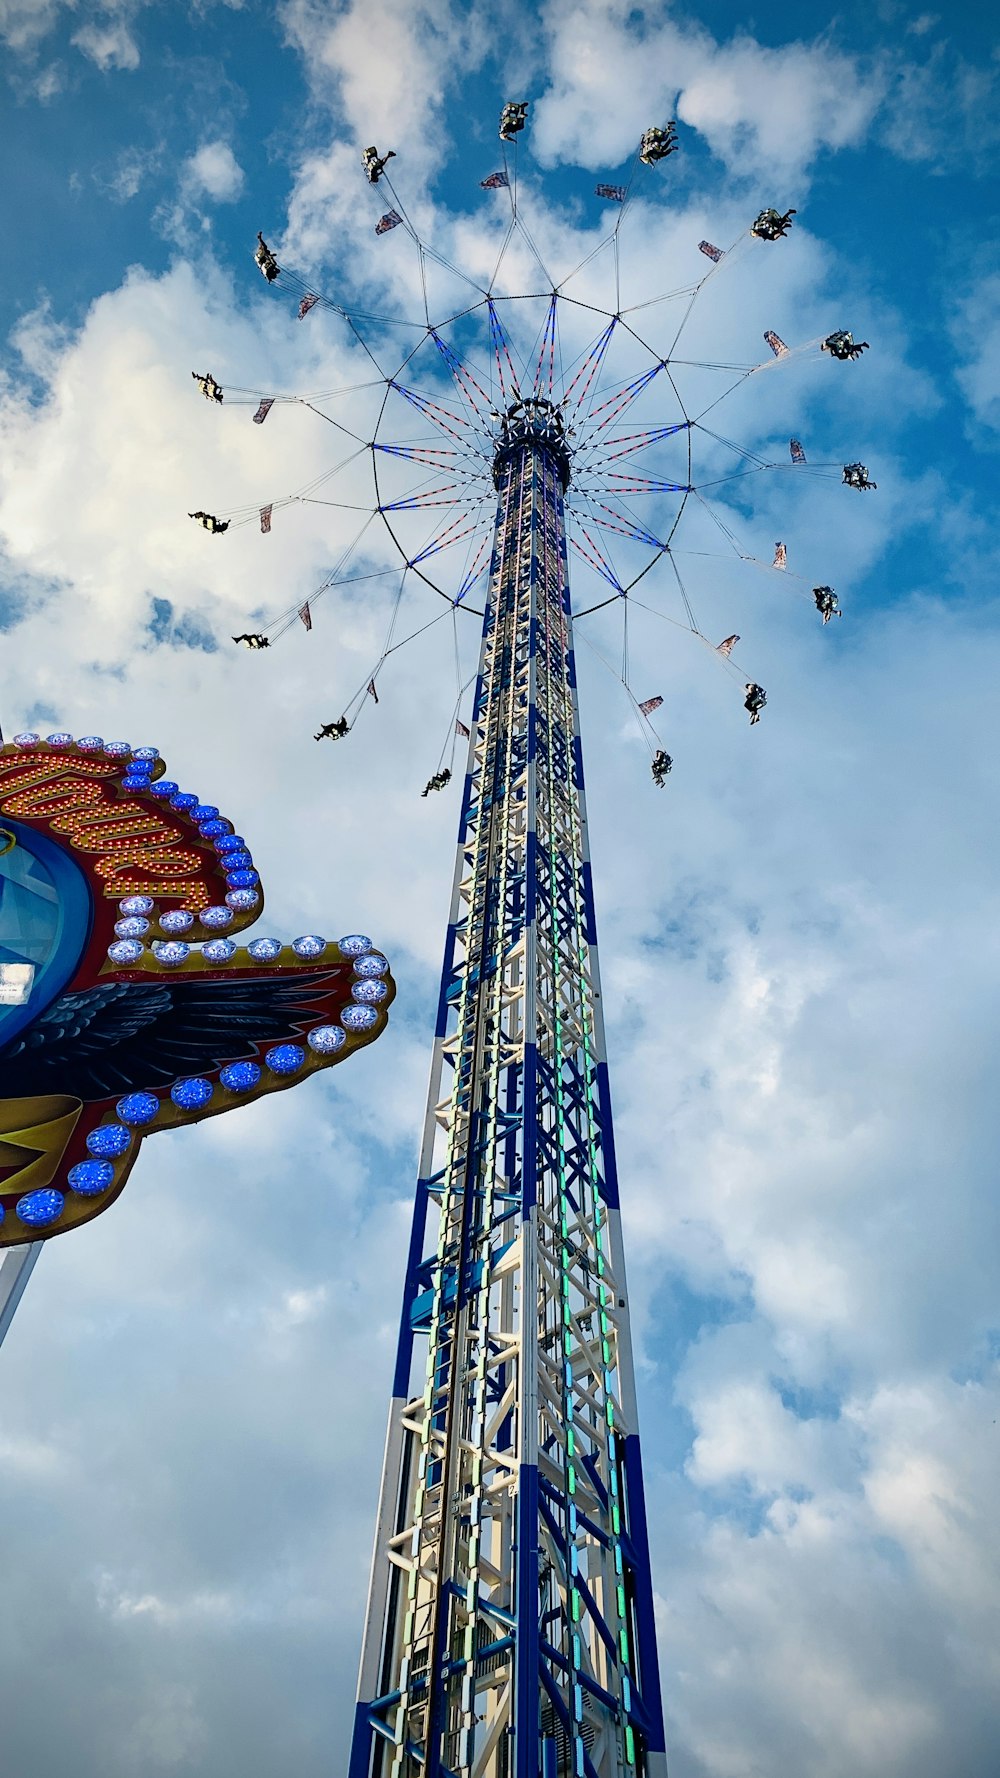 a ferris wheel and a carnival ride against a cloudy blue sky